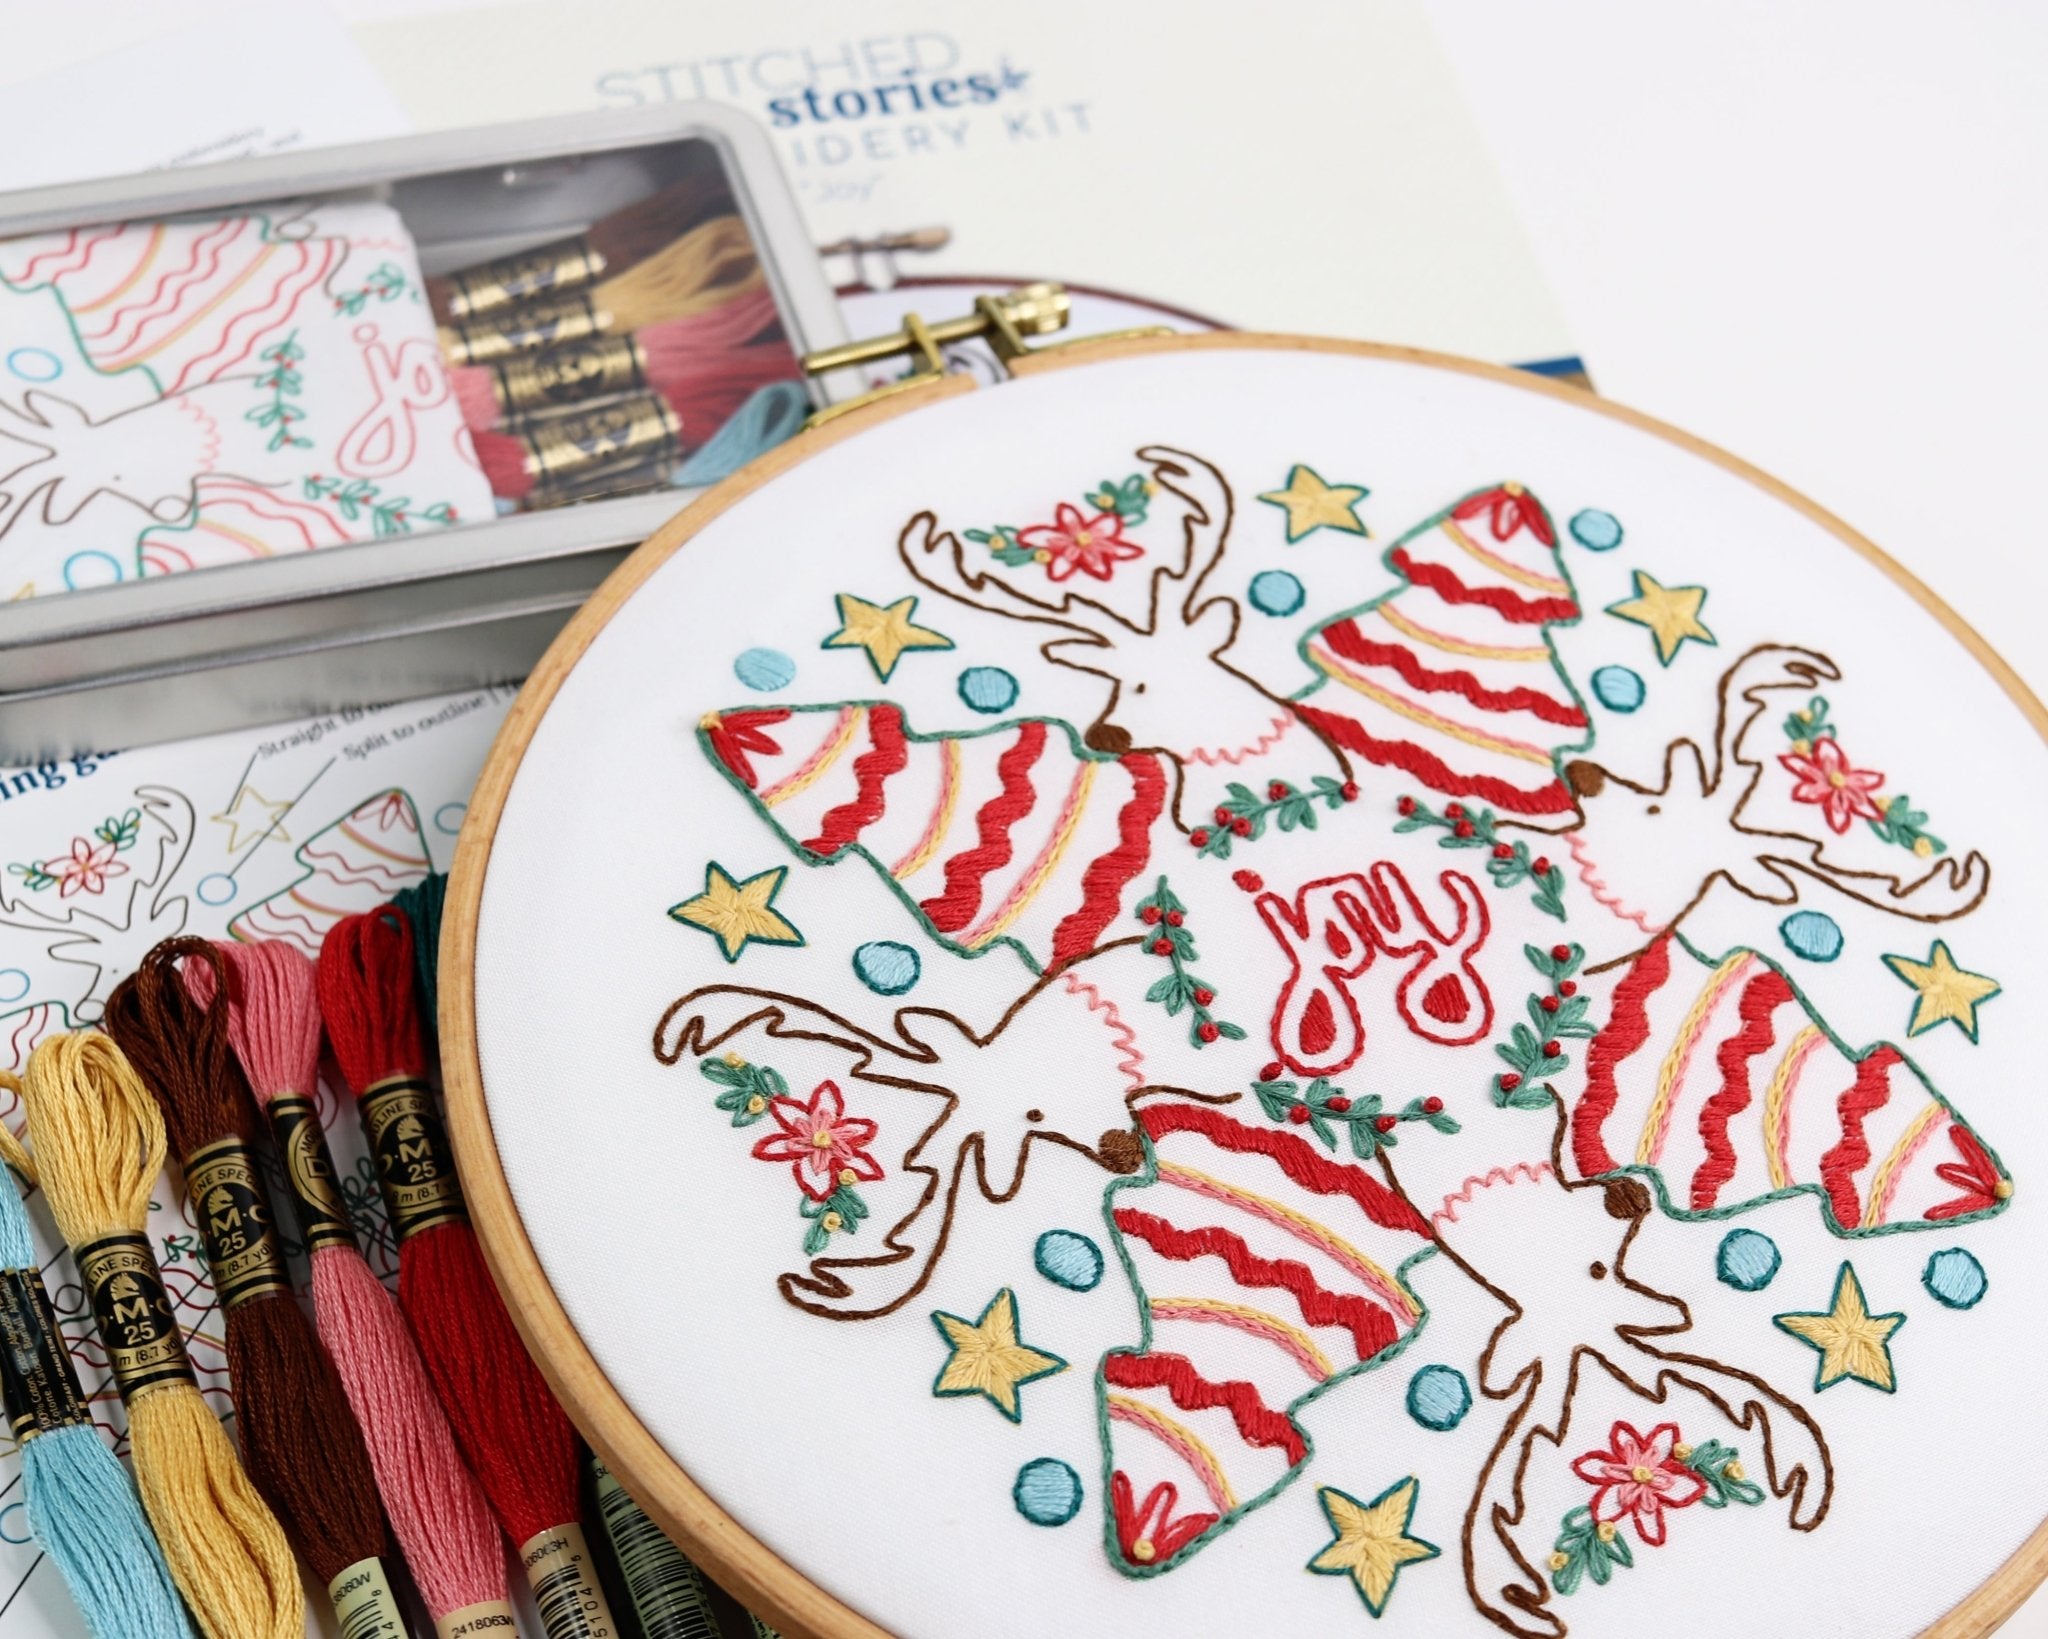 Mandala-Styled Embroidery Kits and Patterns - Stitched Stories